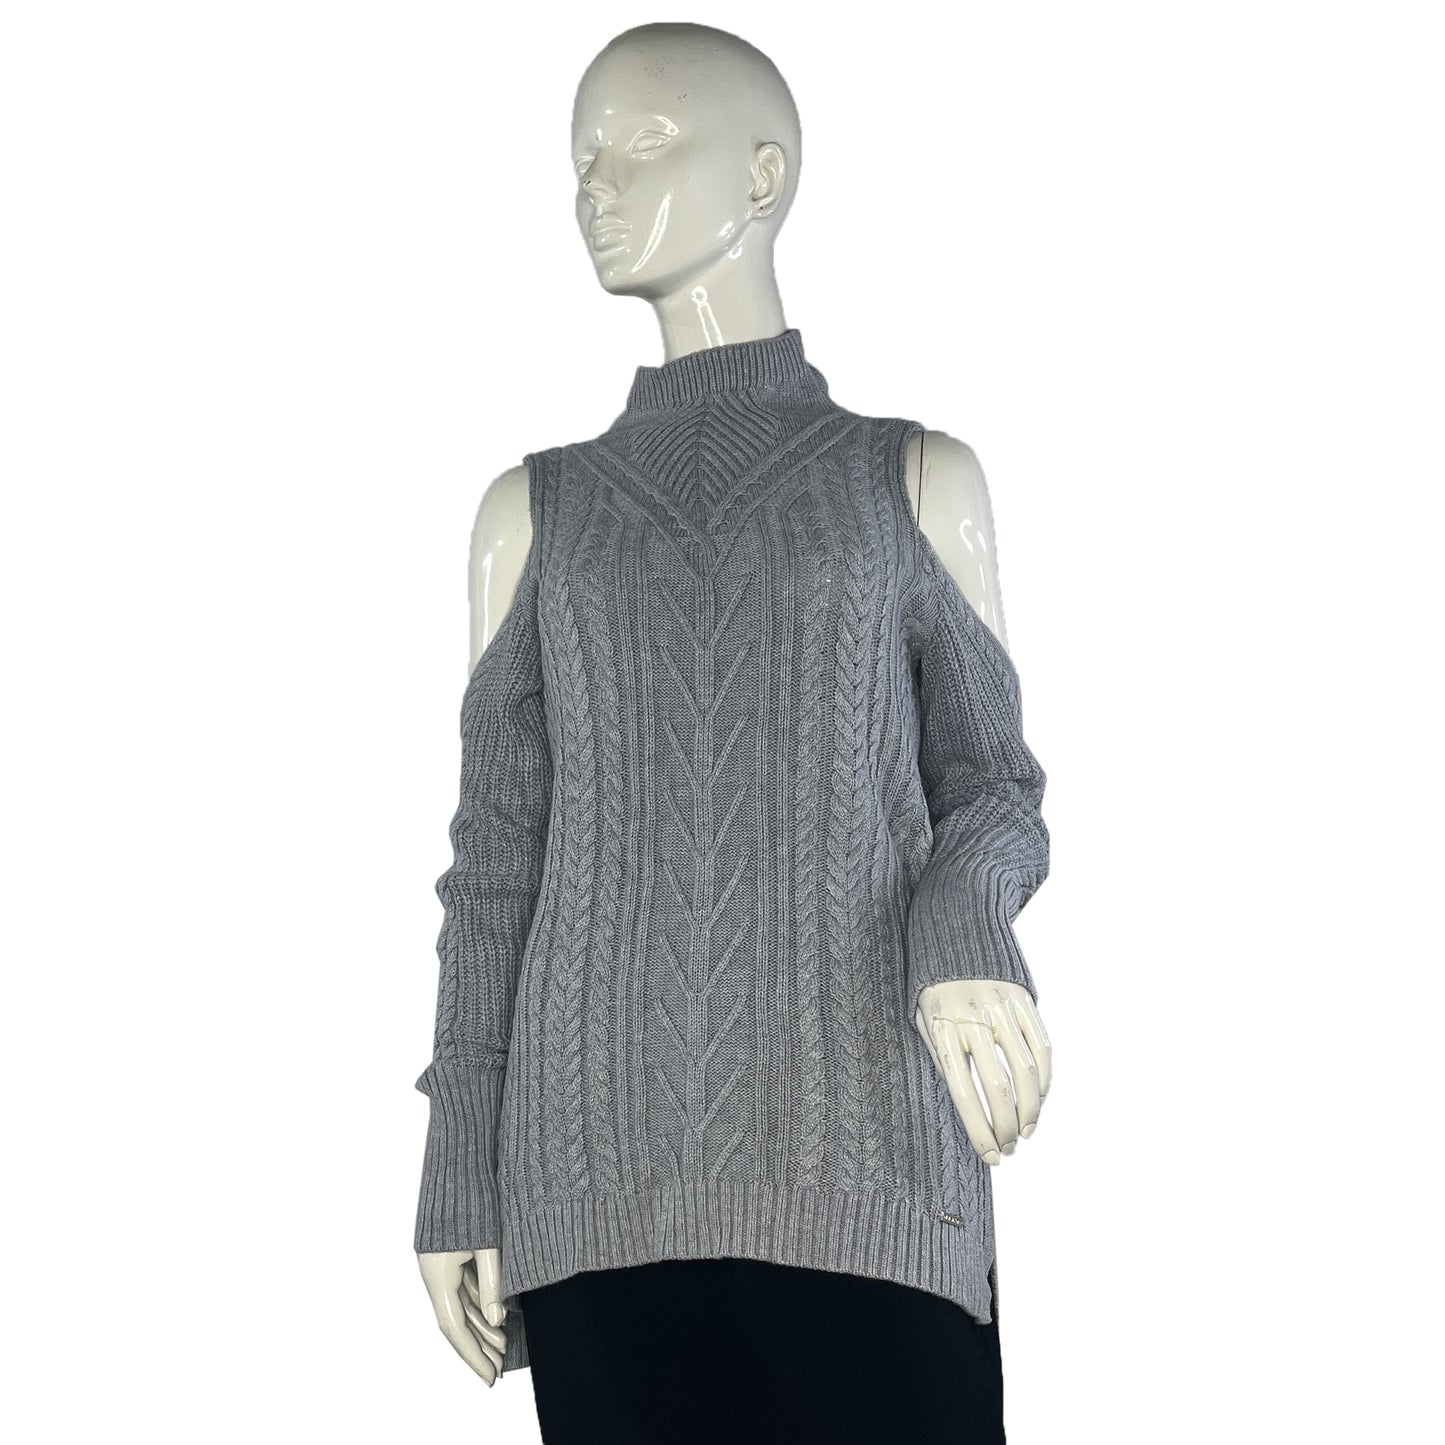 Michael Kors Sweater Open Shoulder Gray Size M SKU 000418